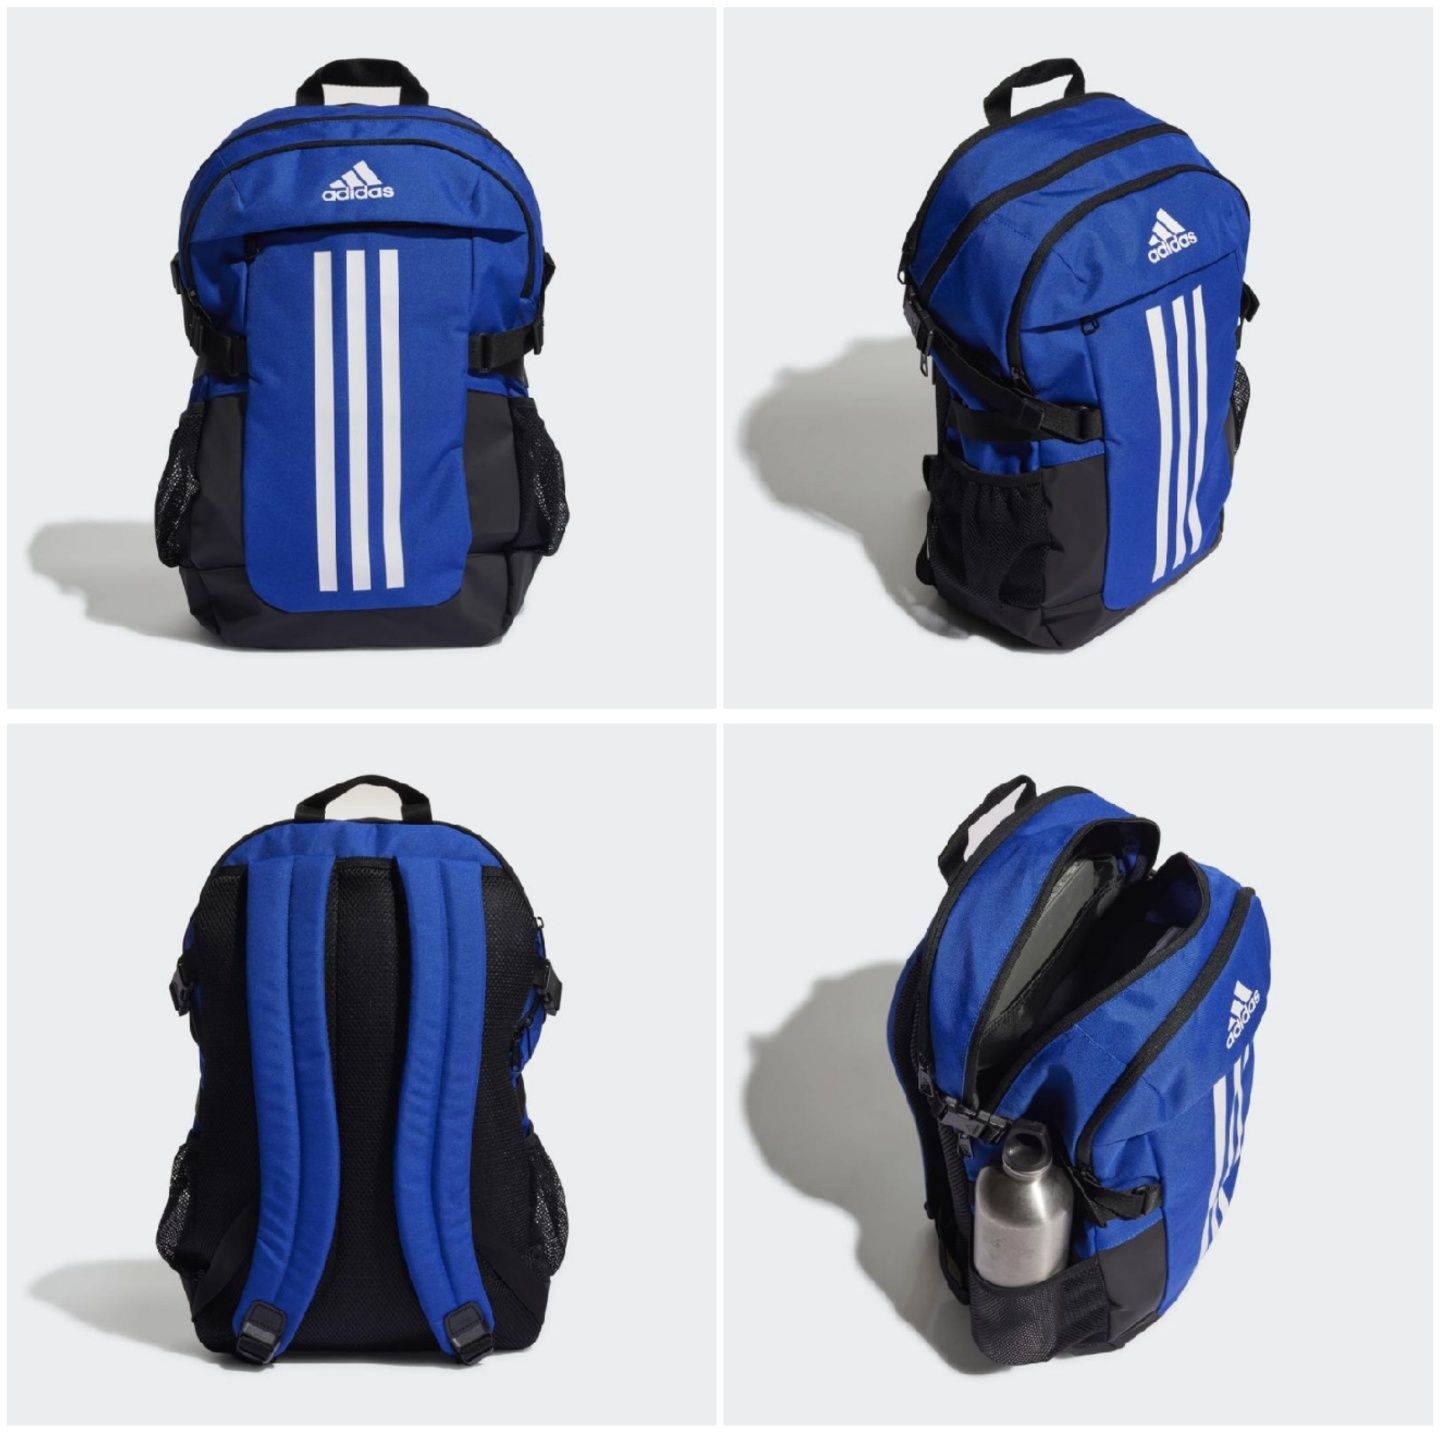 Рюкзак adidas power backpack blue